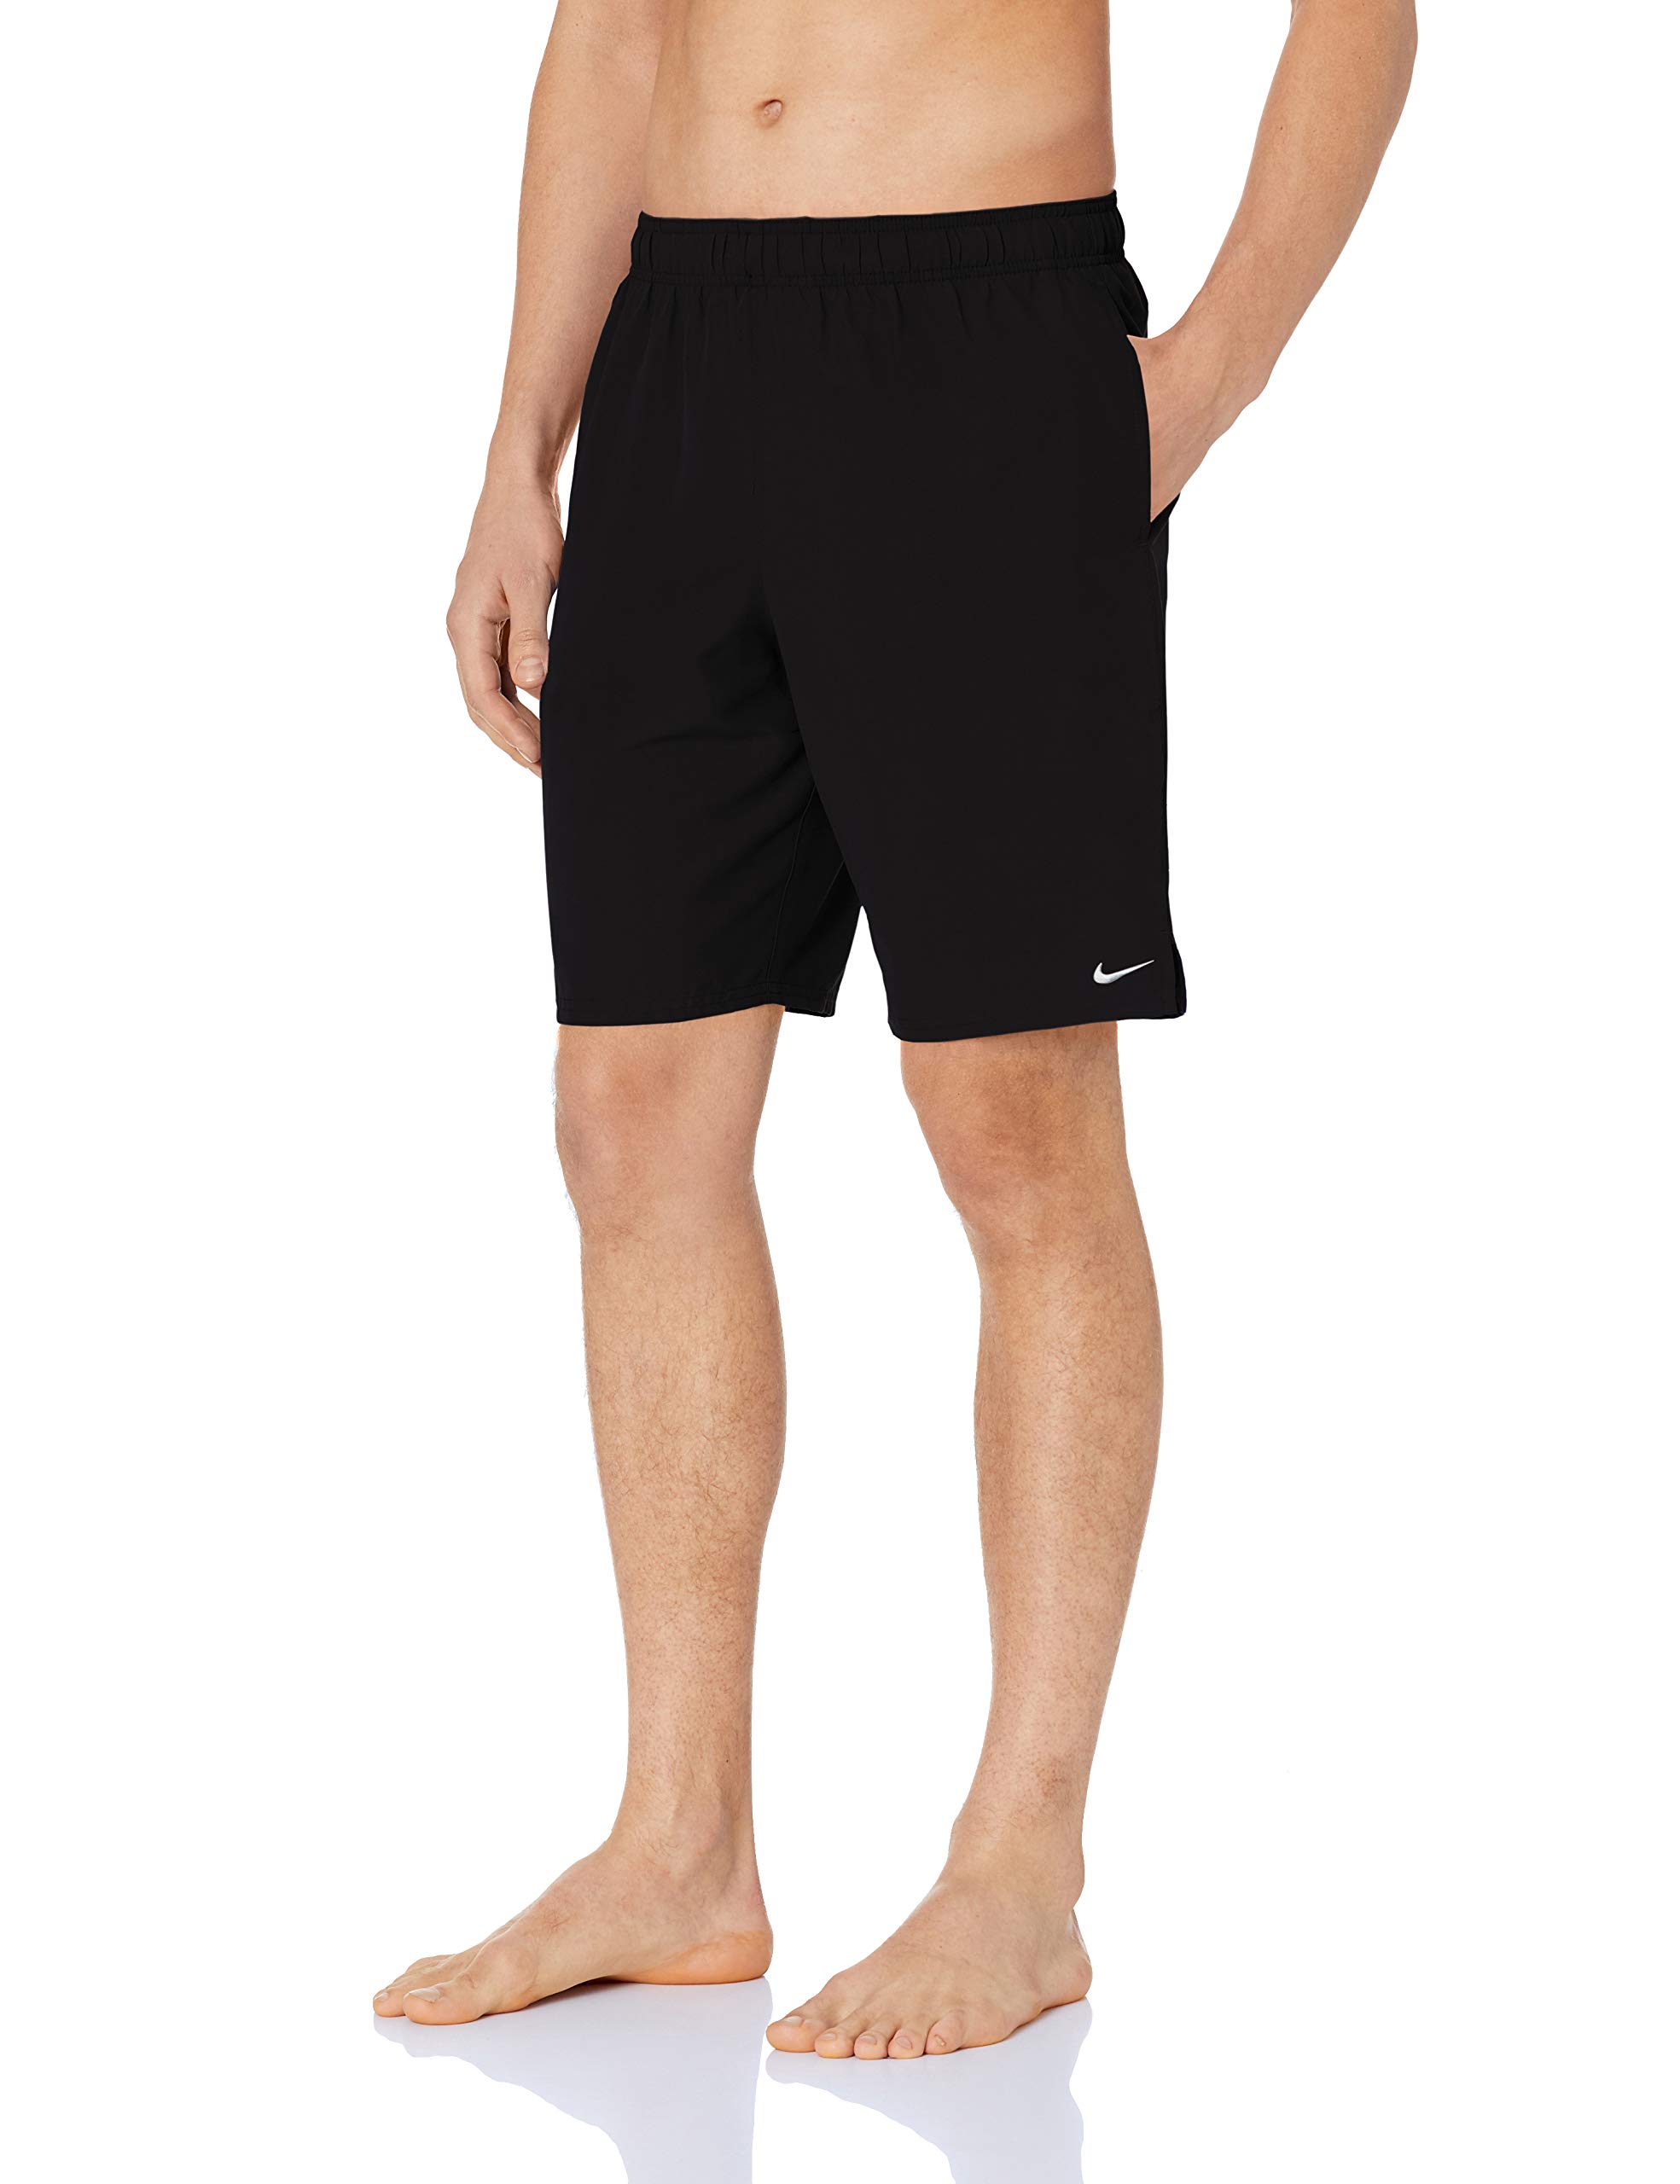 Nike Mens Solid Lap 9 Inch Volley Short Swim Trunk - Black White - L